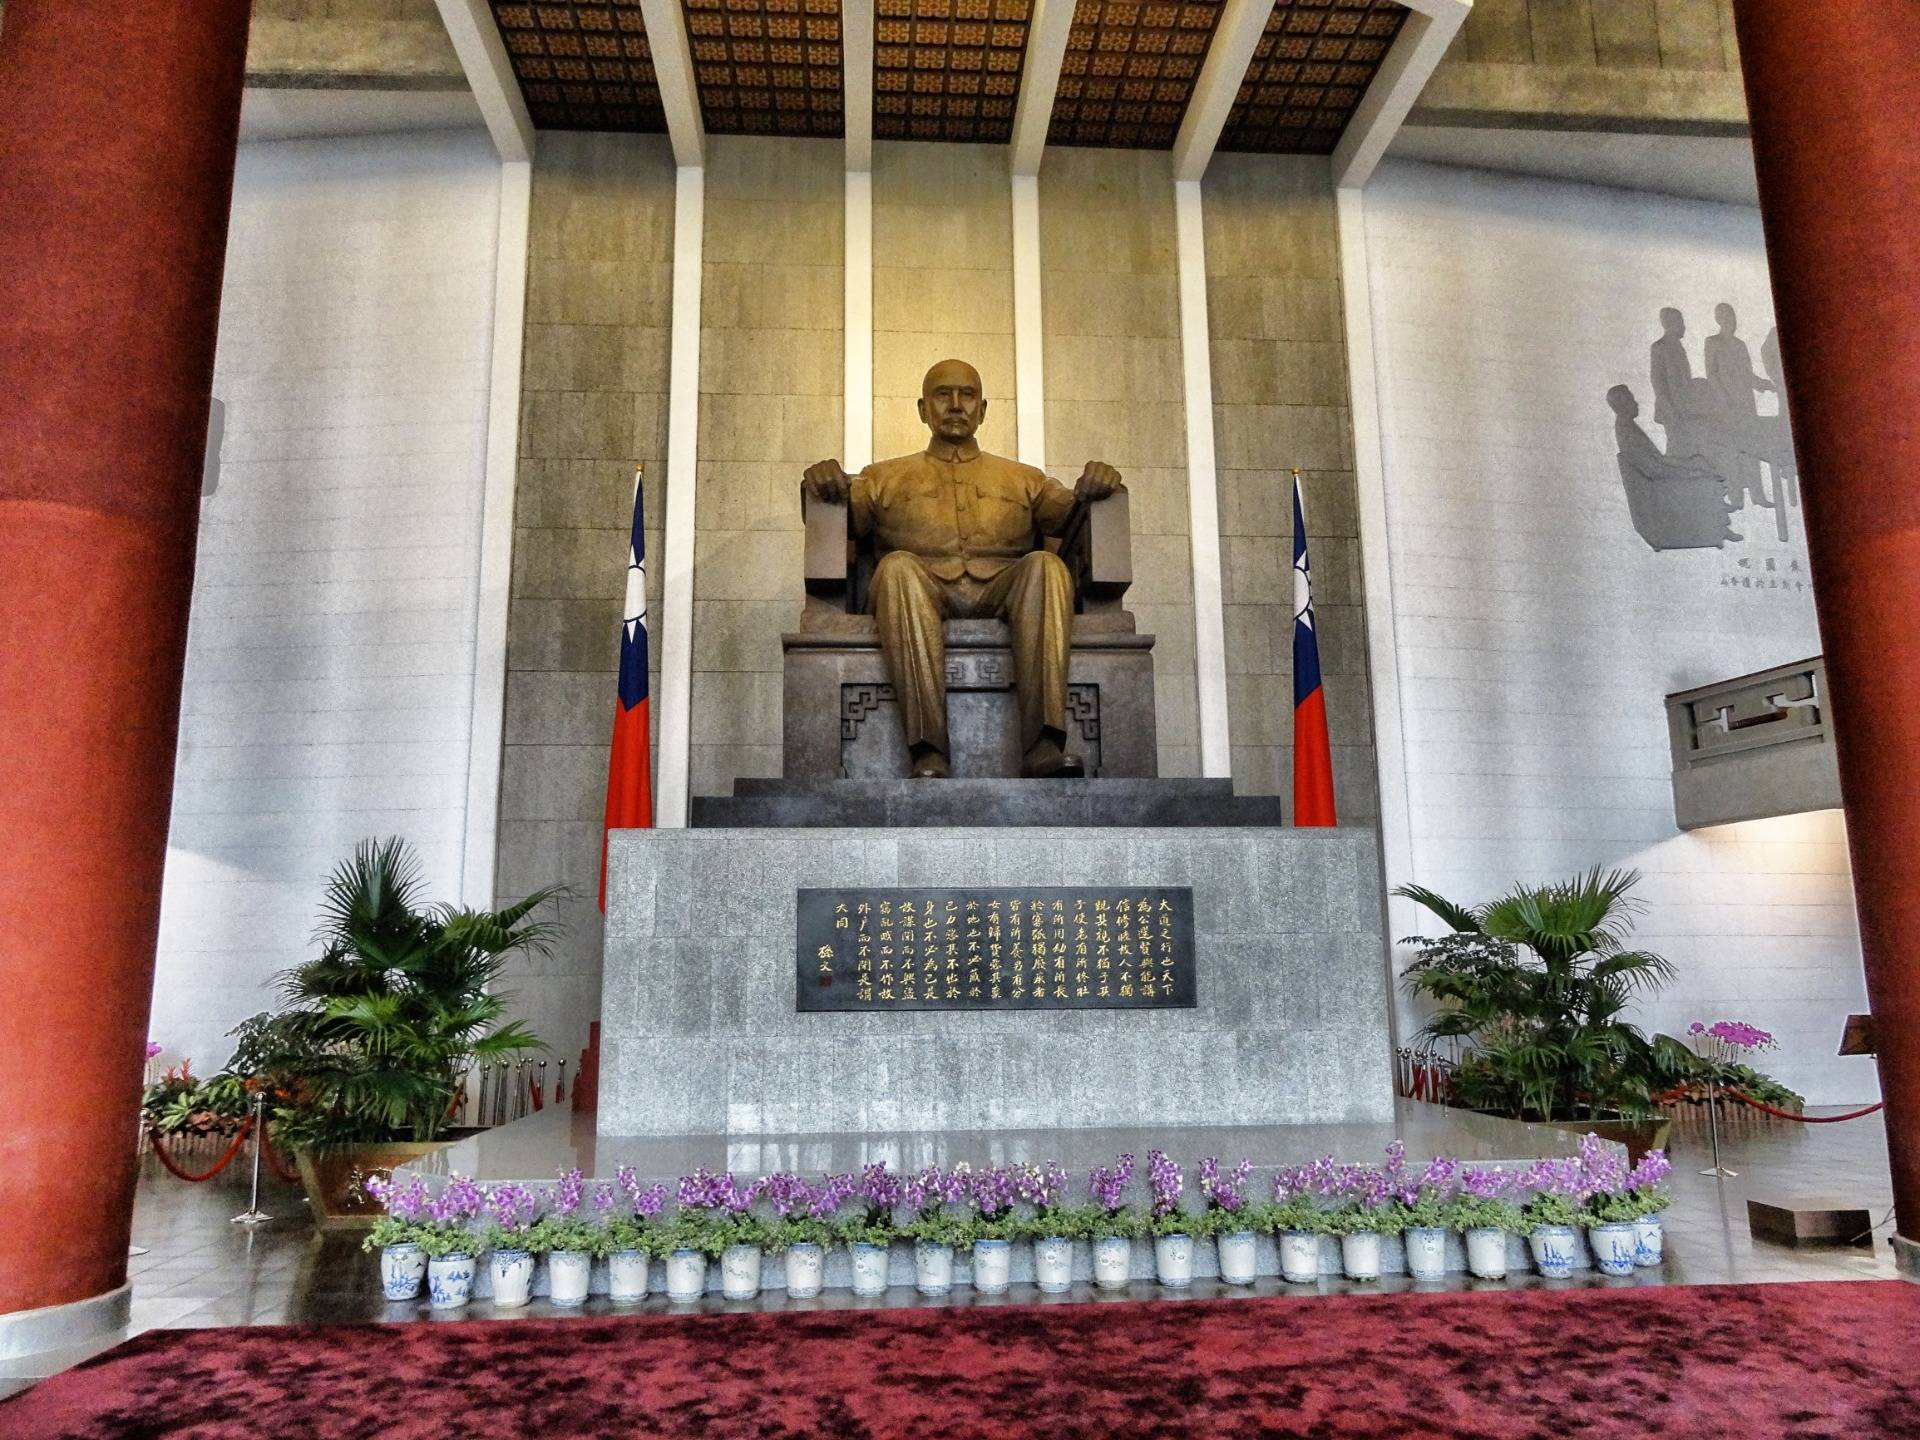 Flowers for Chiang Kai-shek